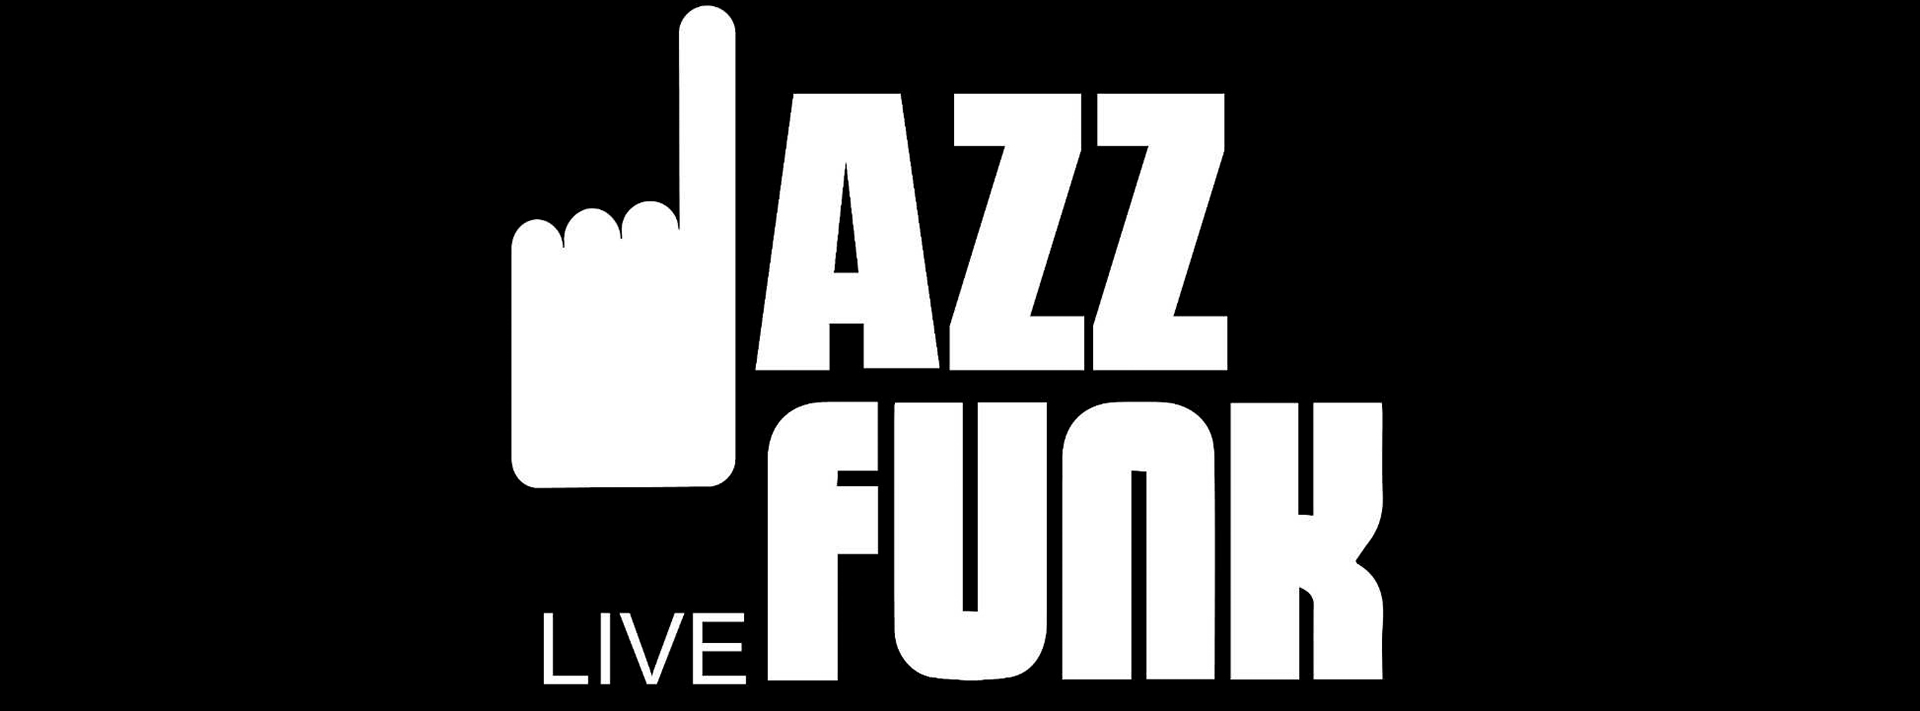 Jazz Funk Music Live Session 2020